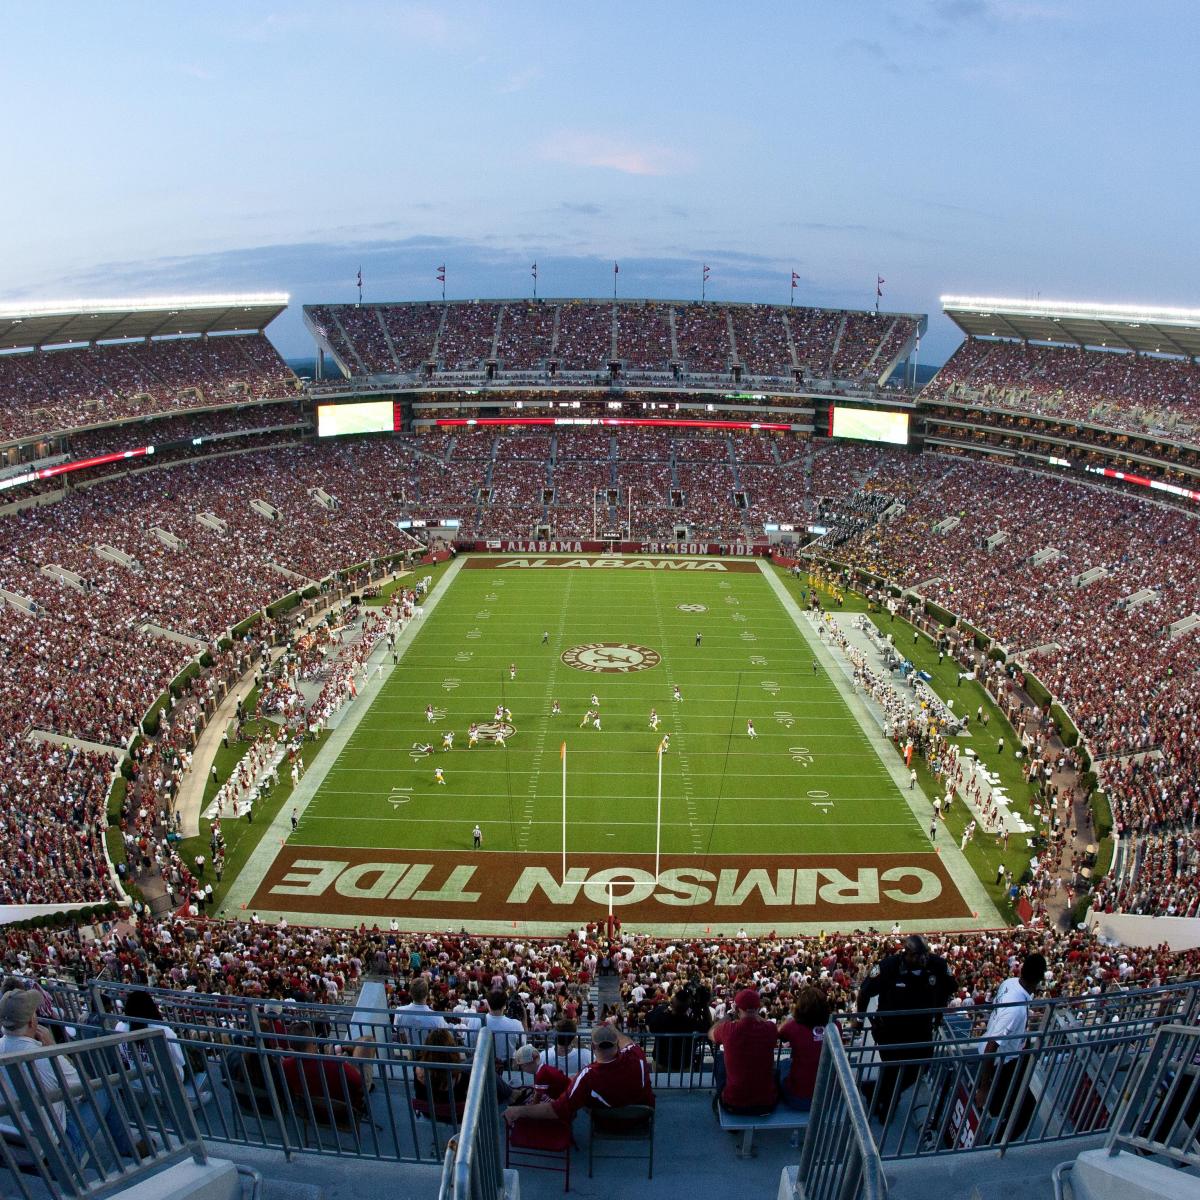 Power Ranking Top 25 College Football Stadiums of 2015 | Bleacher